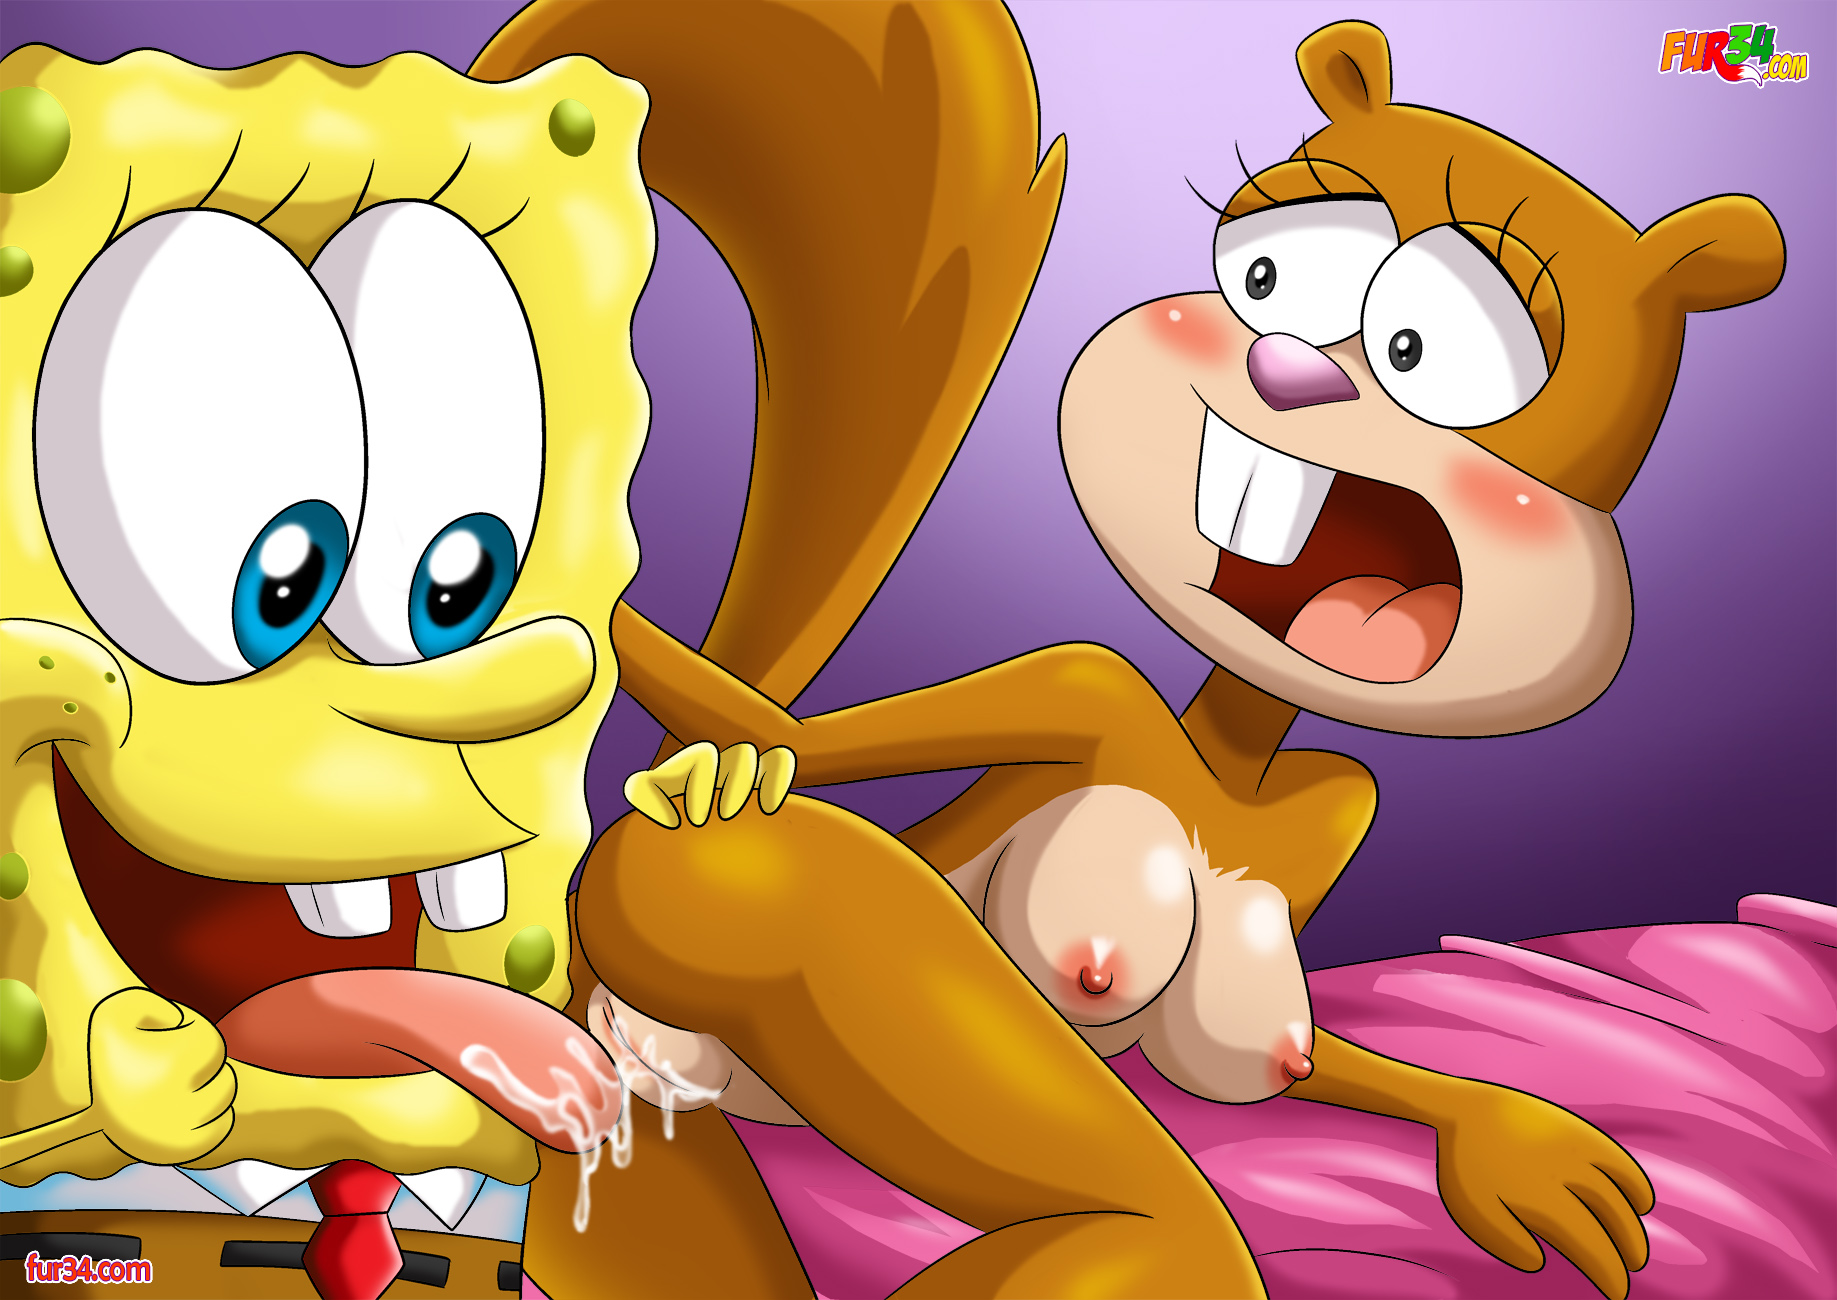 bbmbbf, sandy cheeks, spongebob squarepants (character), fur34, spongebob s...